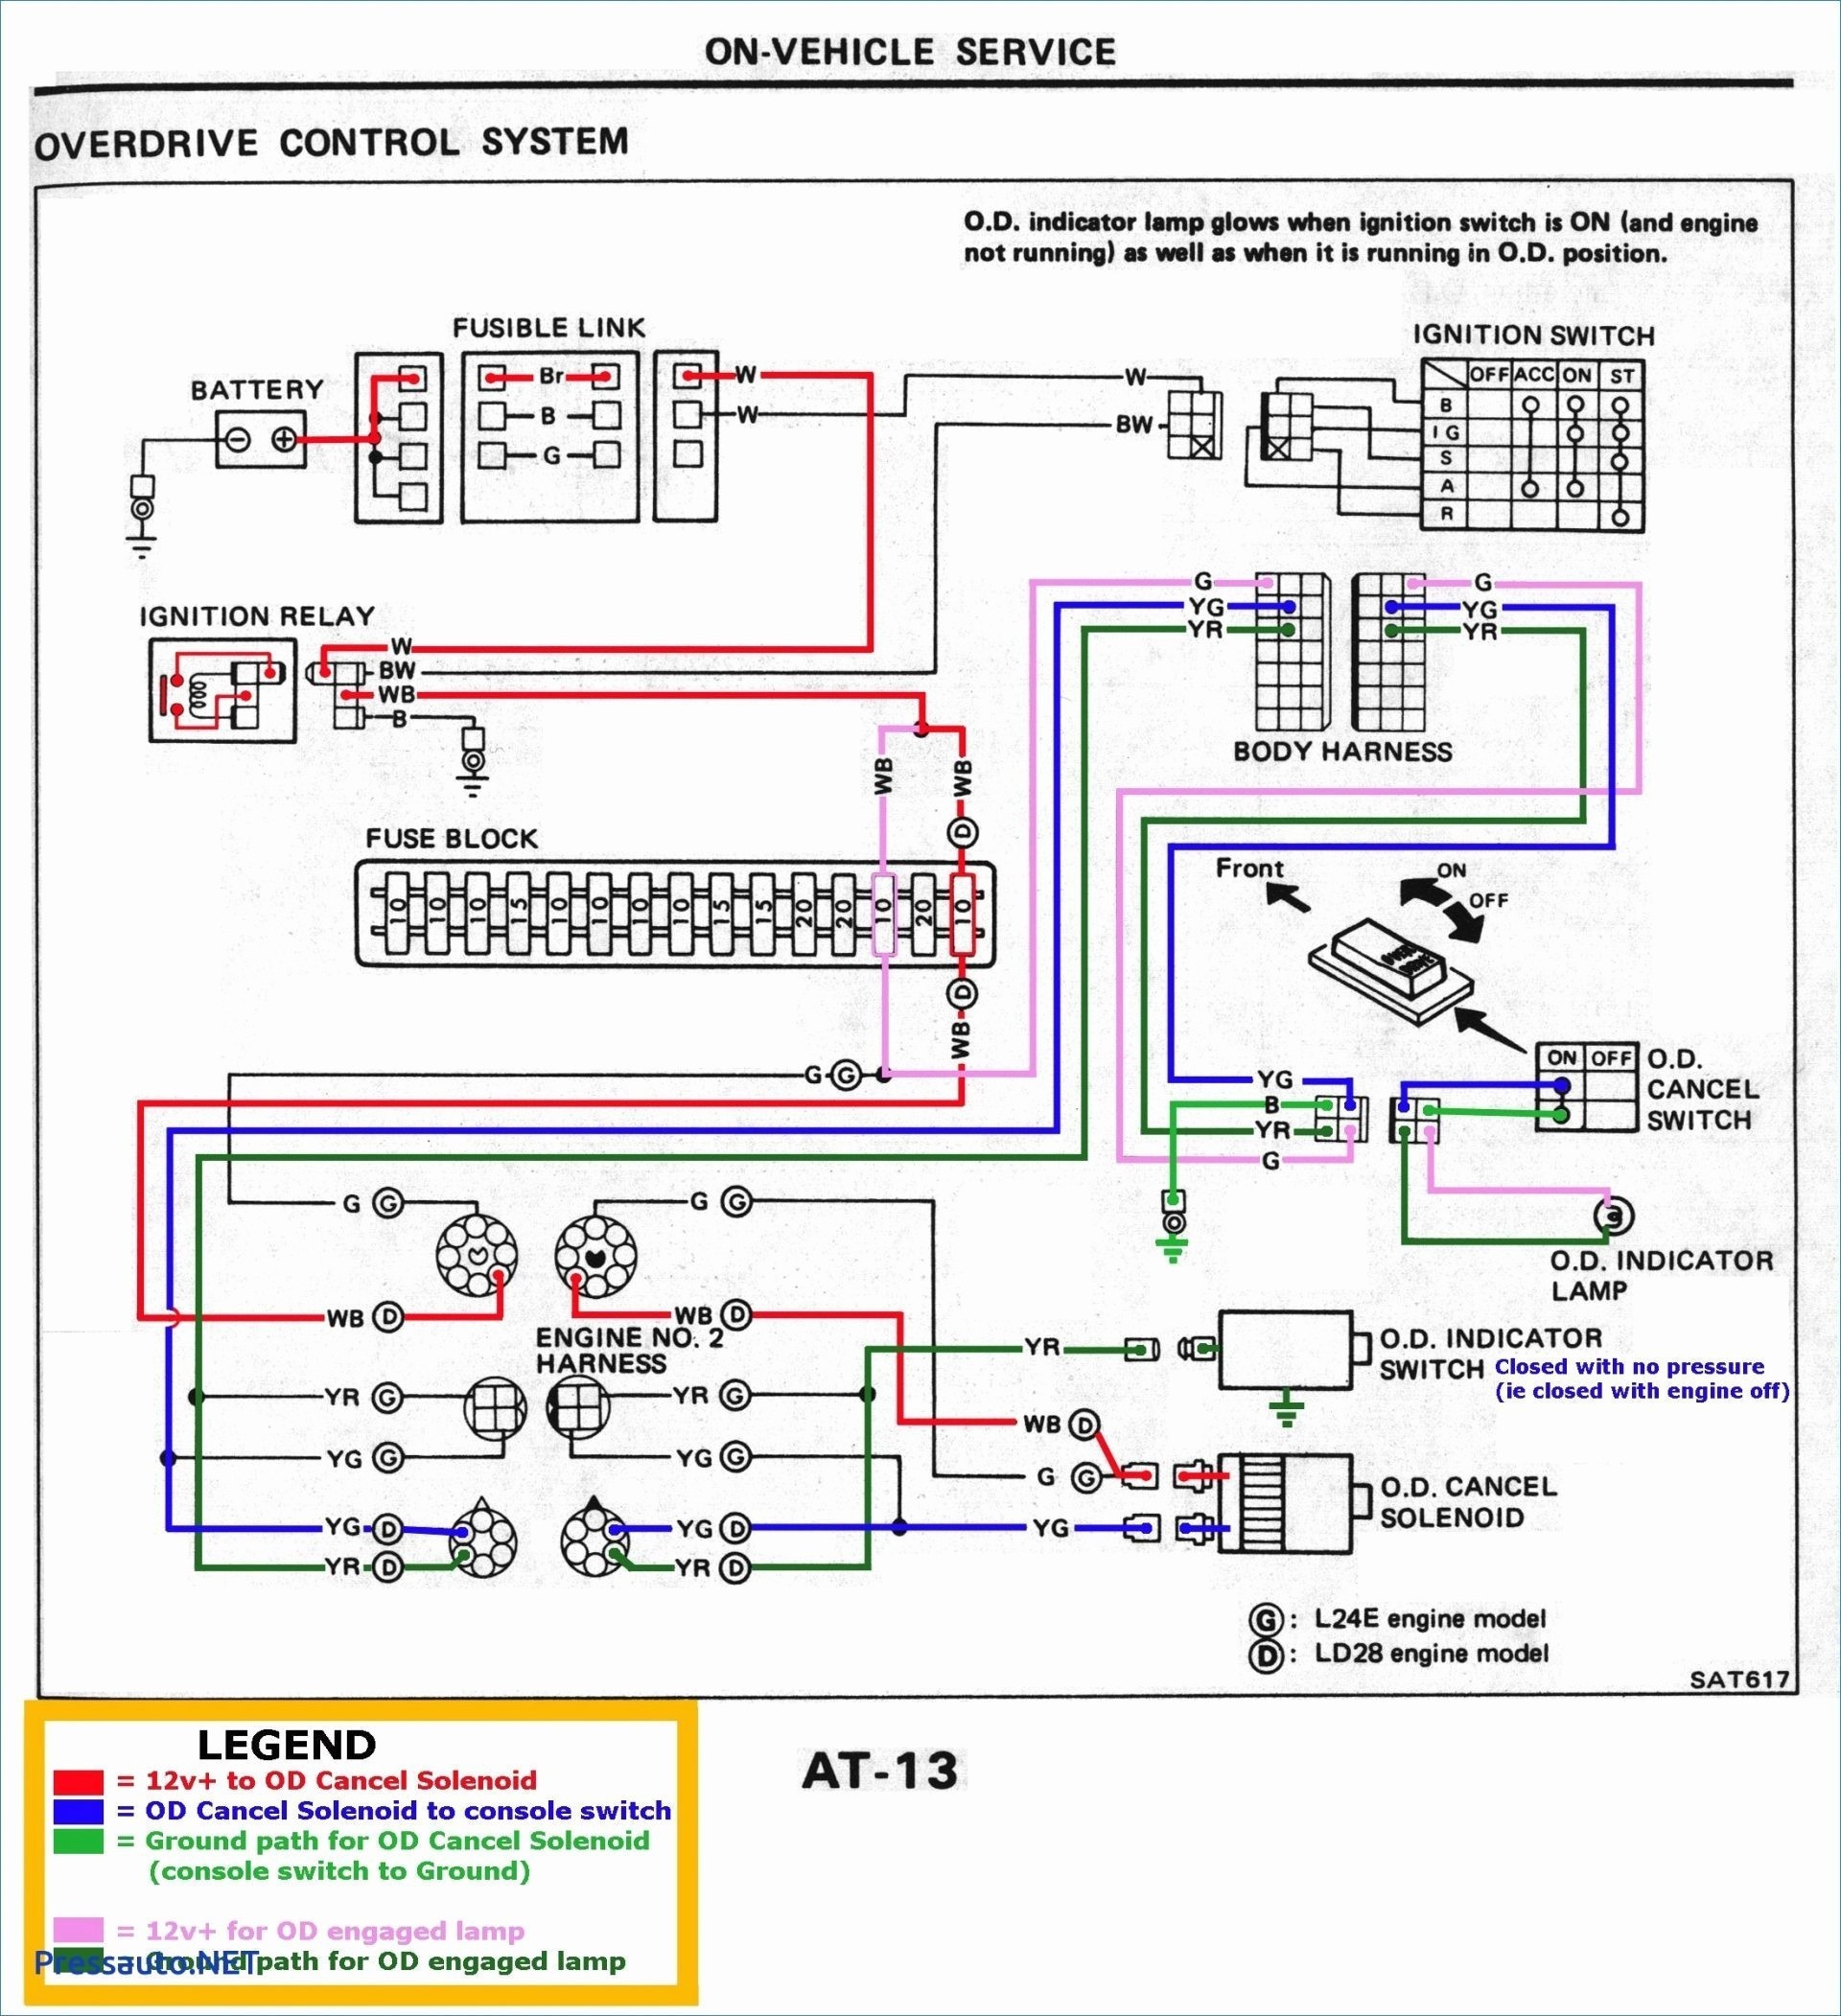 Generator Changeover Switch Wiring Diagram Uk Fresh New Wiring Diagram Replace Generator with Alternator